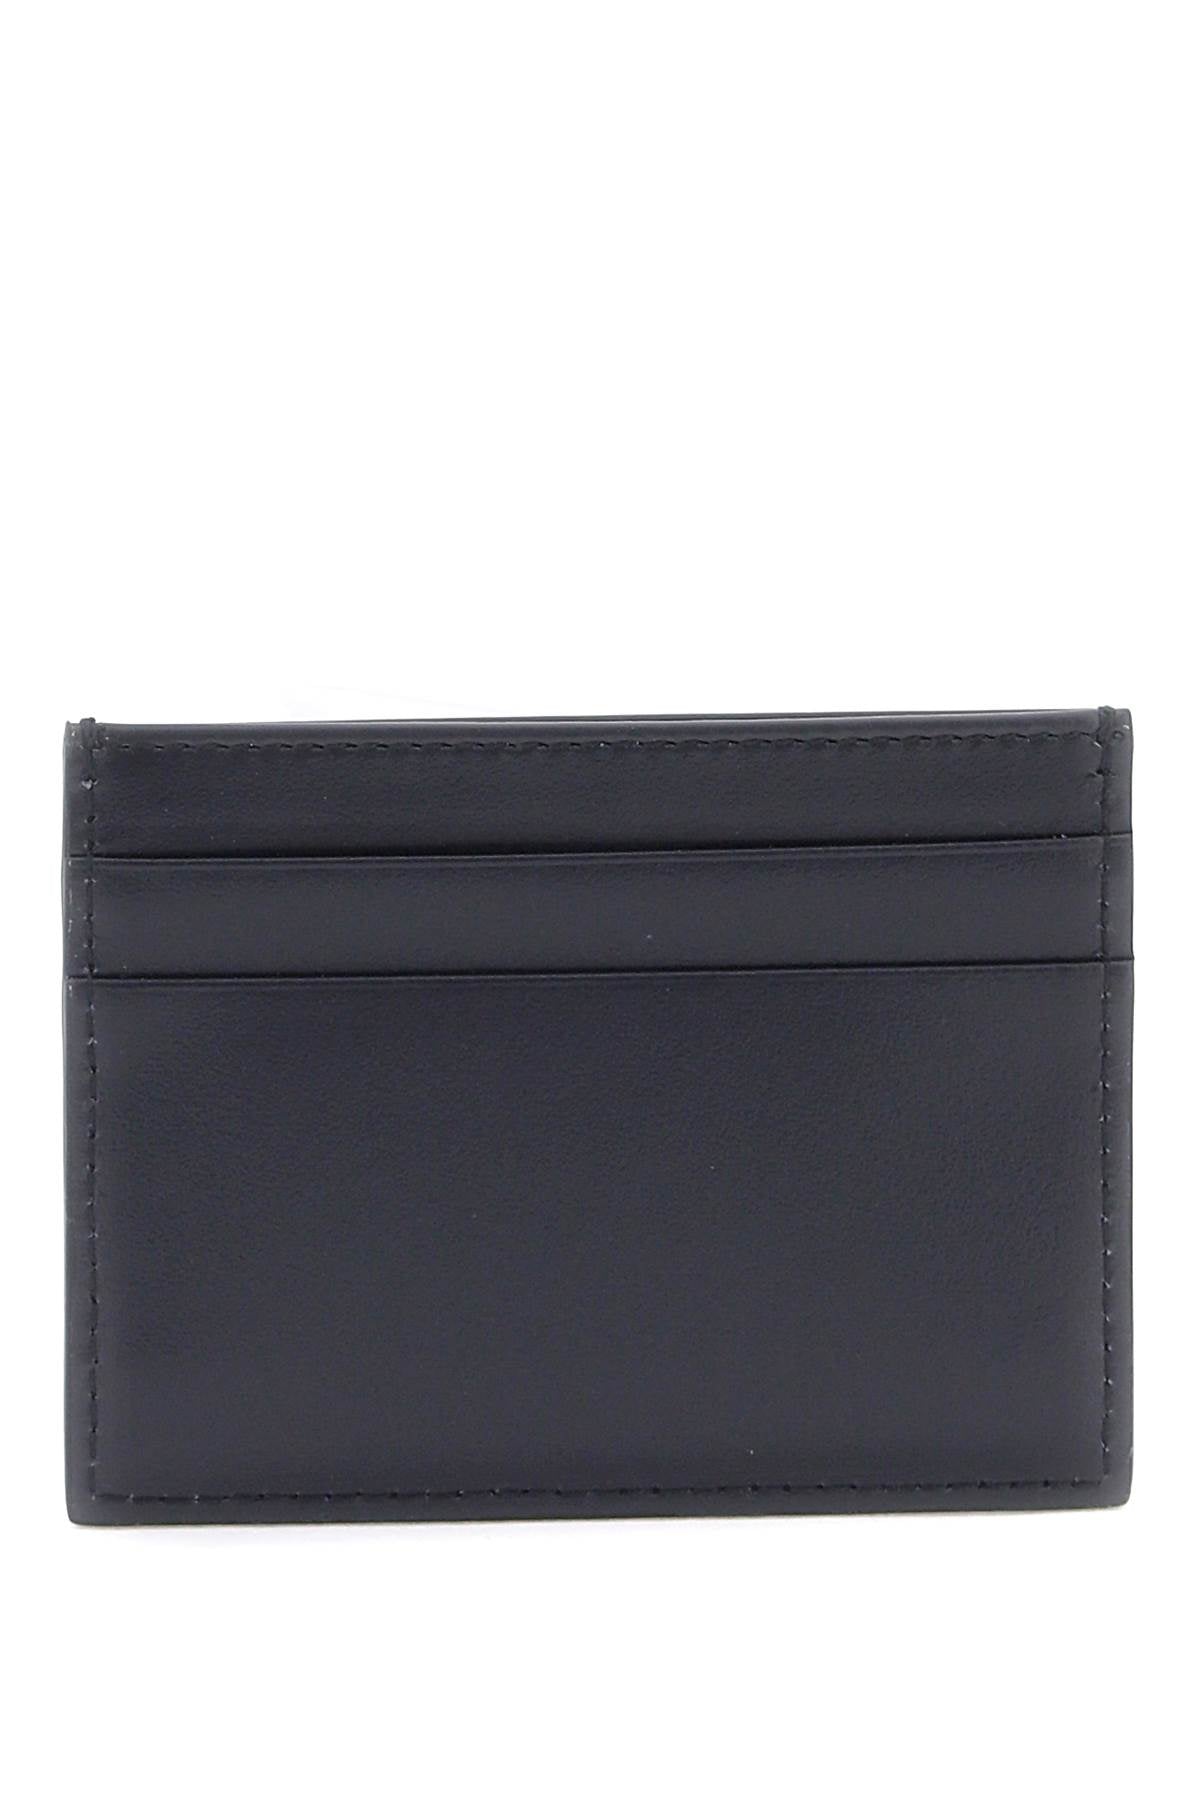 Dolce & gabbana logo leather cardholder-2